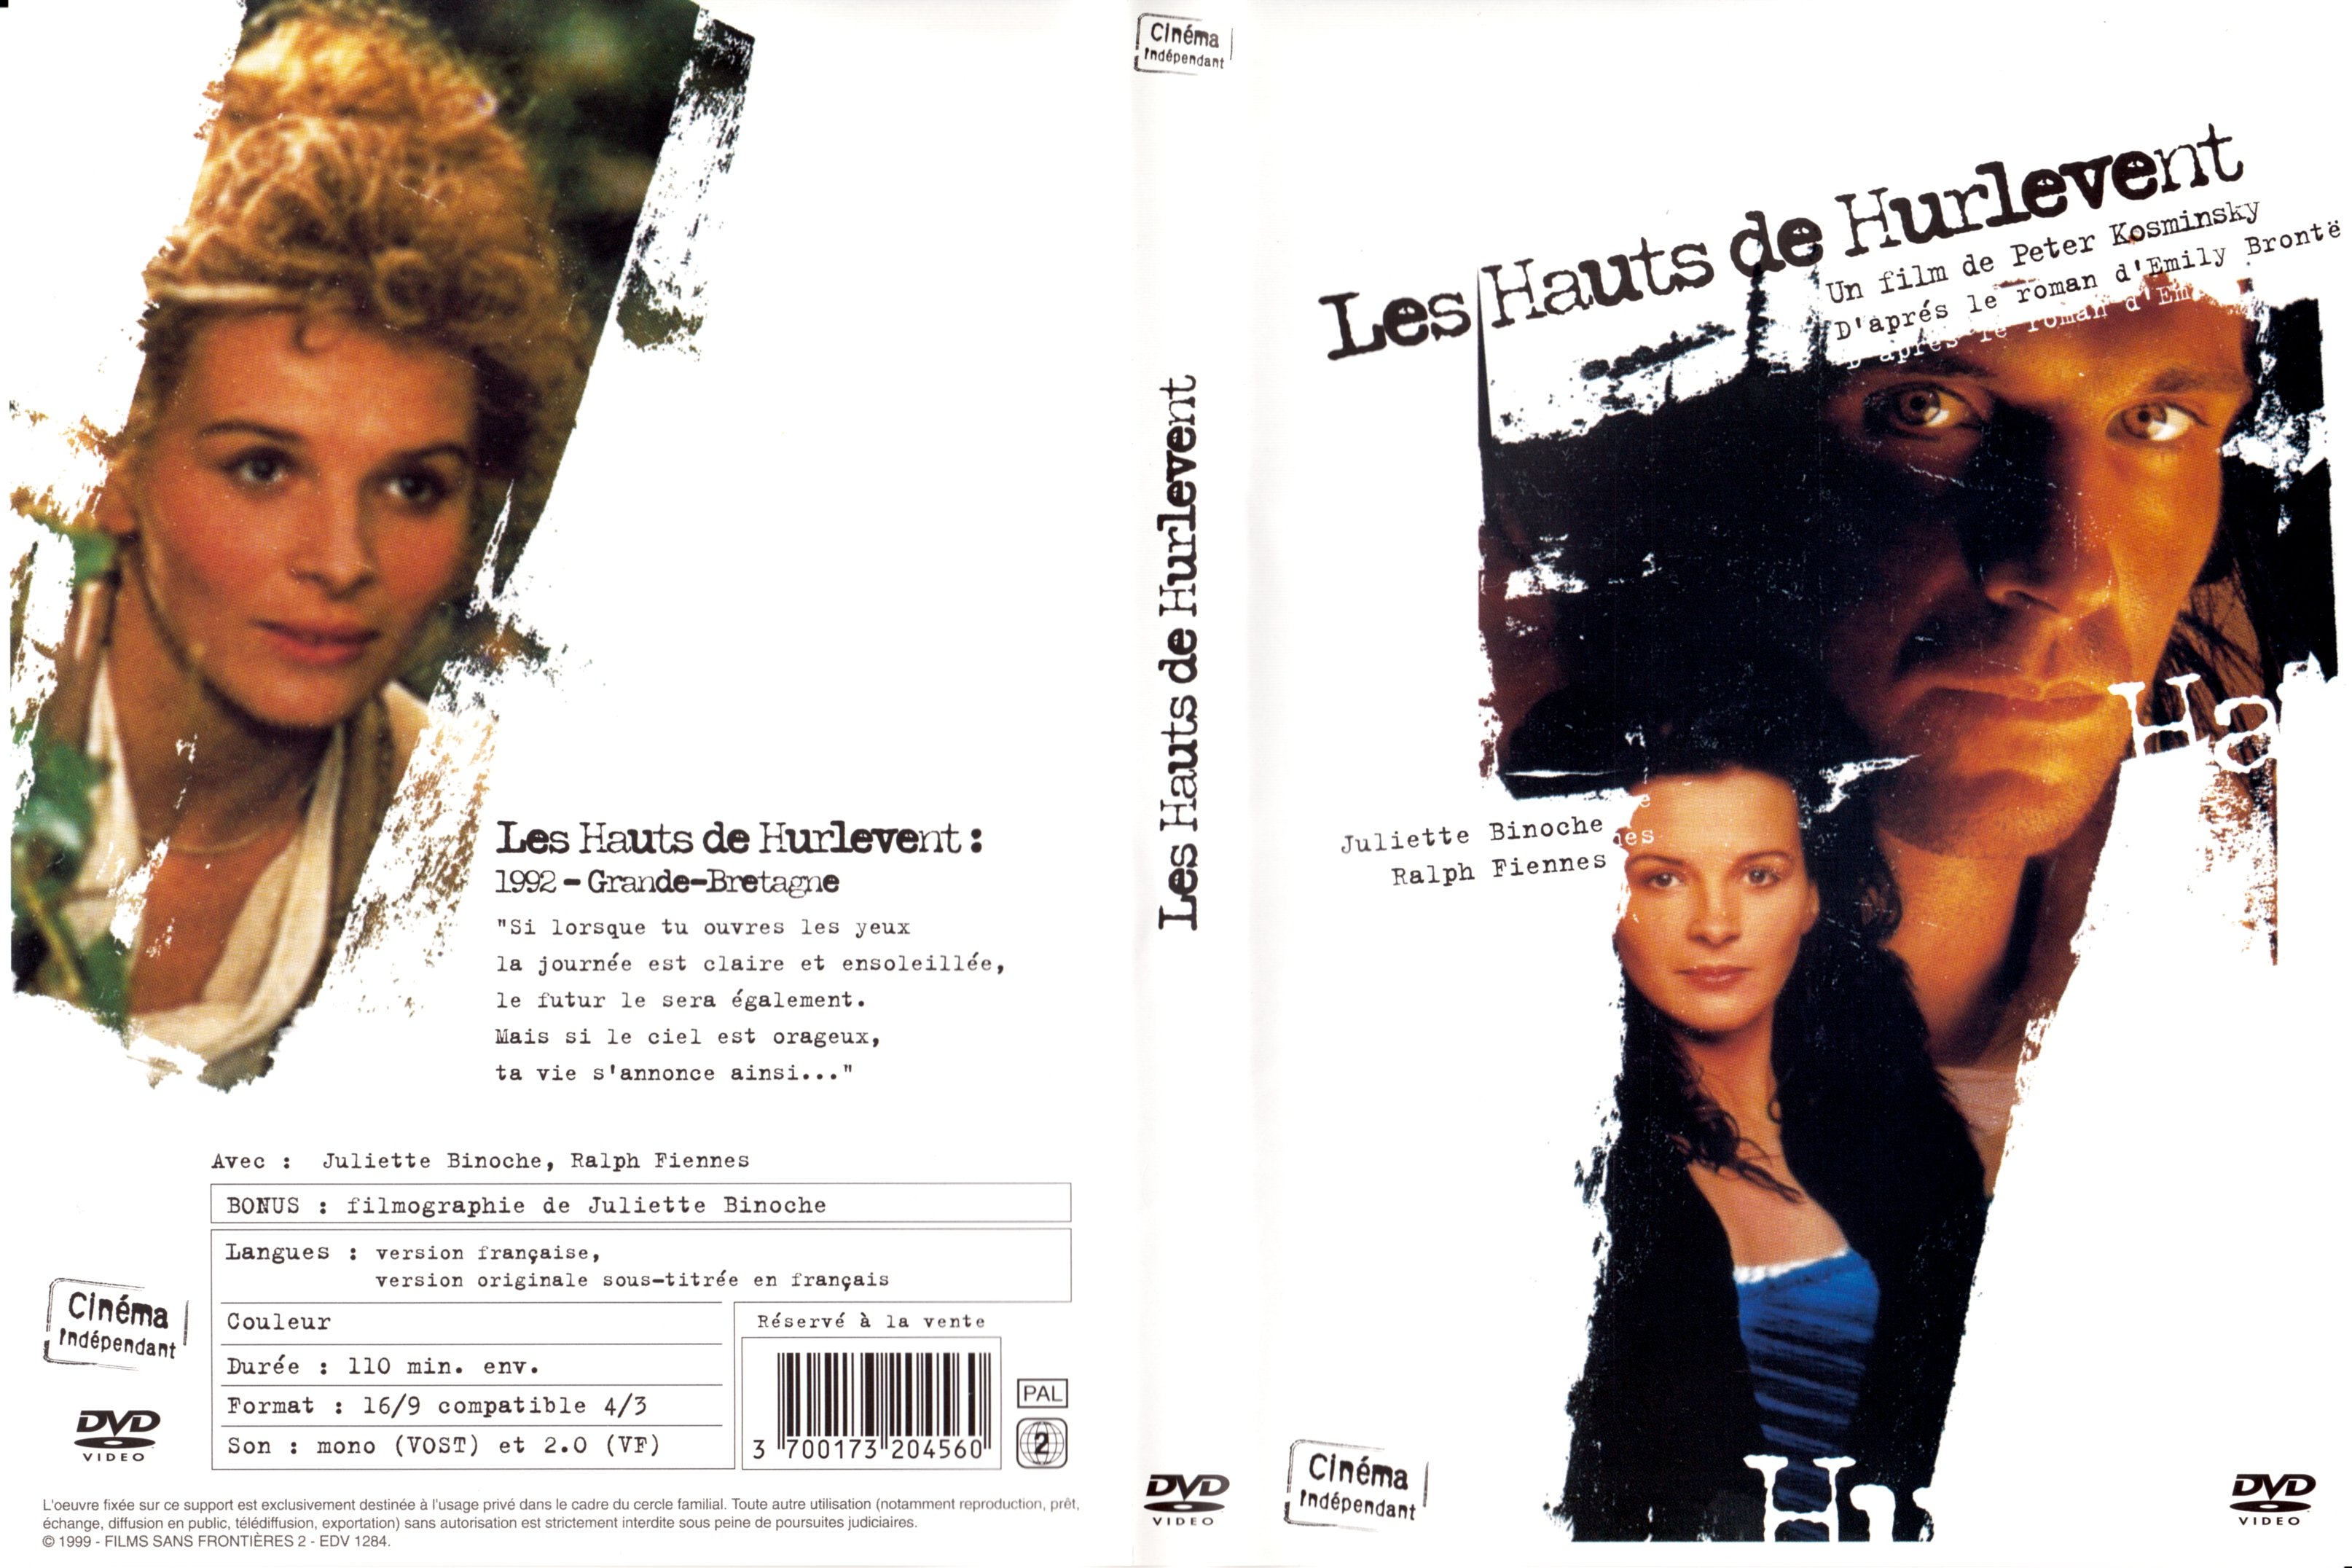 Jaquette DVD Les Hauts de Hurlevent (1992)